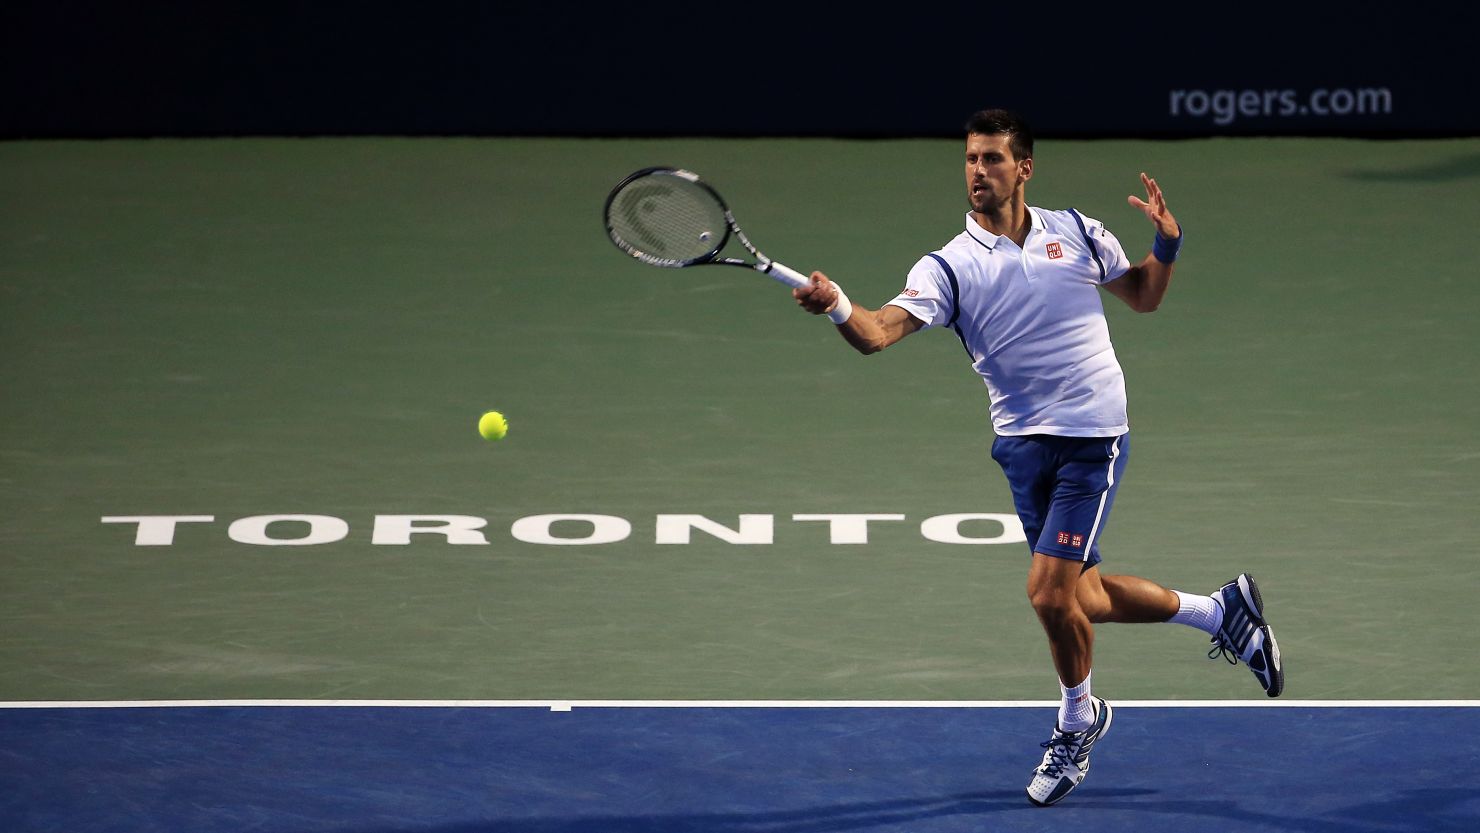 Novak Djokovic claimed his fourth Rogers Cup title in Toronto thanks to a 6-3 7-5 win over Kei Nishikori.